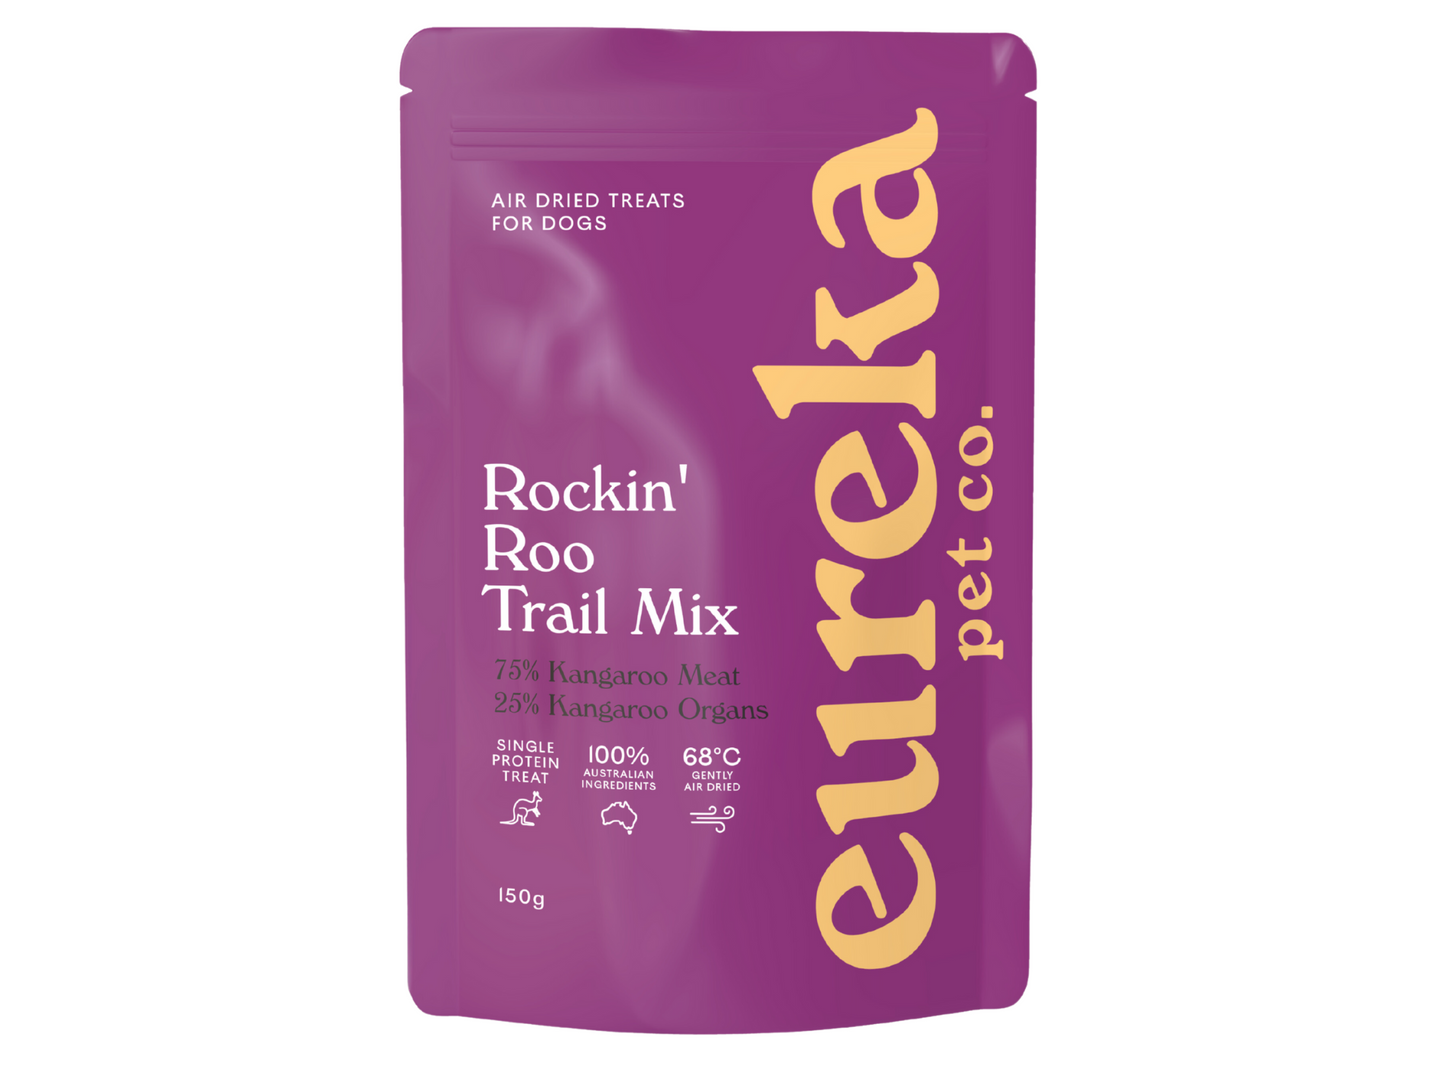 A bag of Rockin' Roo Trail Mix dog treats.